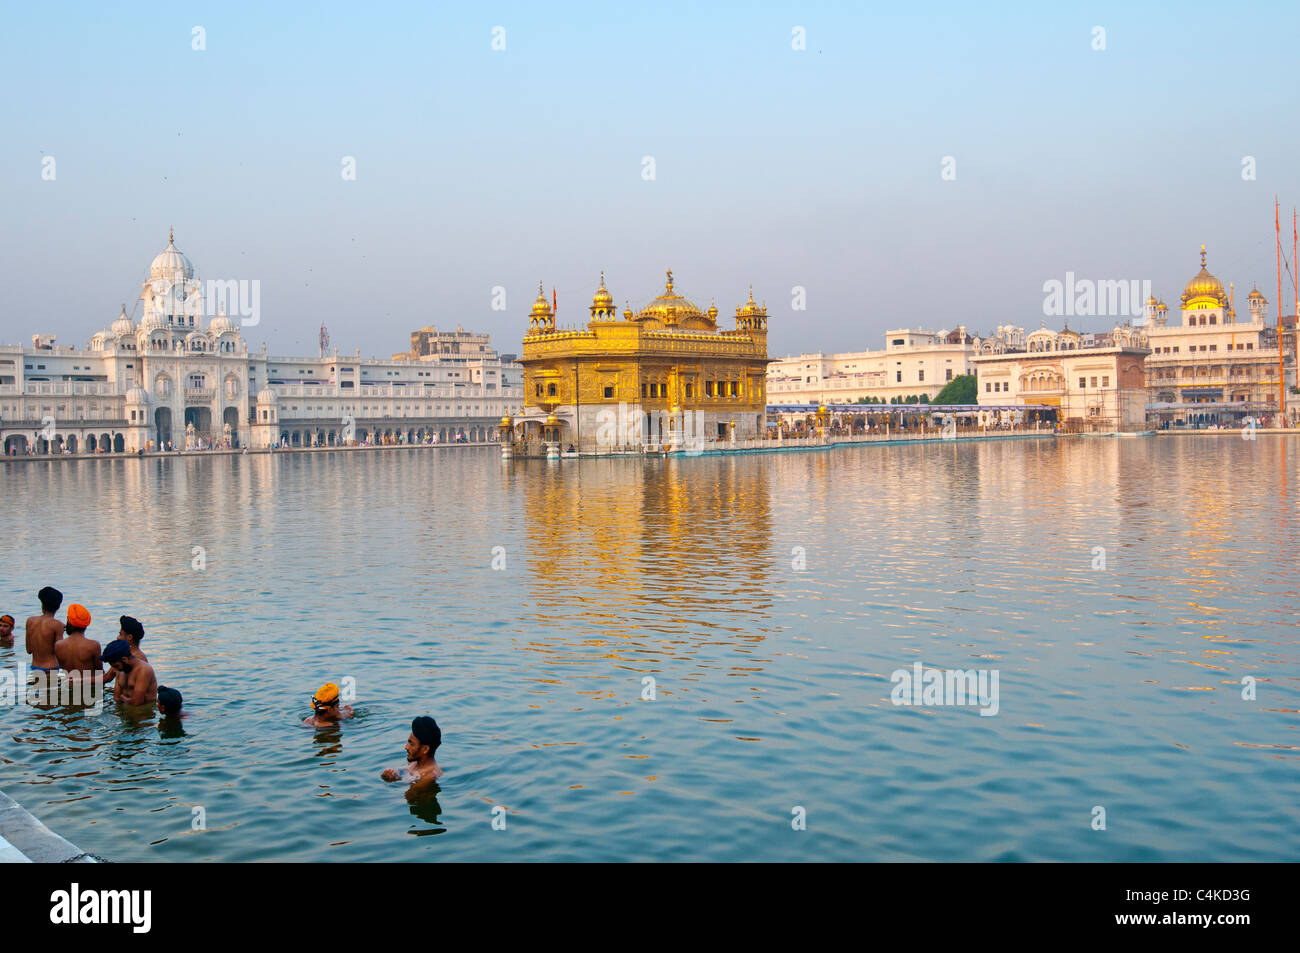 The Harmandir Sahib (The abode of God) or Darbar Sahib also referred to as the Golden Temple, Amritsar, Punjab, India, Asia Stock Photo